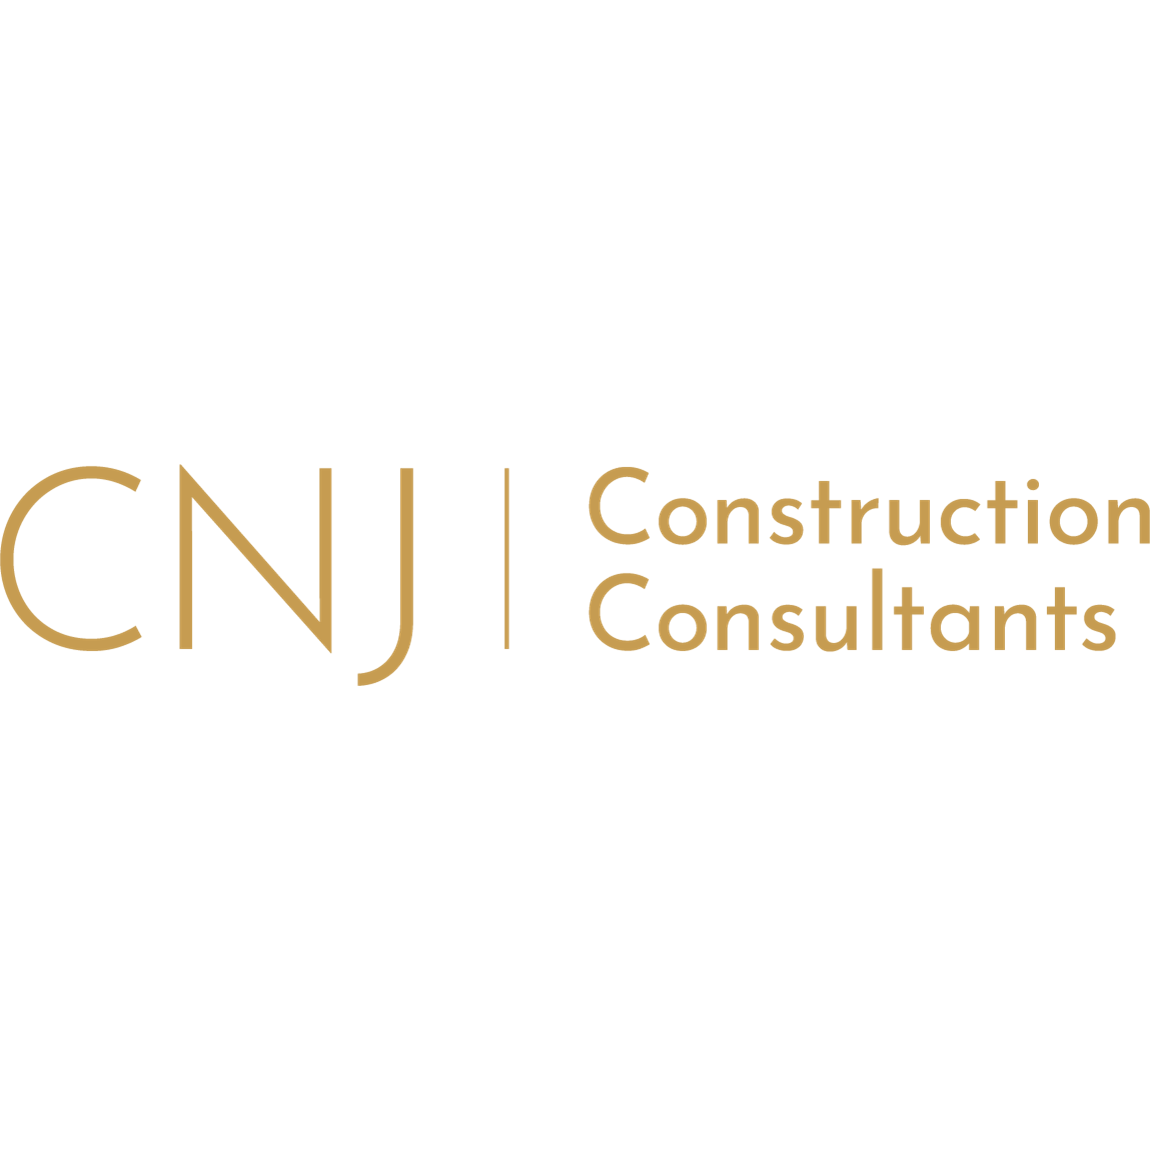 CNJ Construction Consultants - Woking, Surrey GU23 7HN - 01483 339733 | ShowMeLocal.com